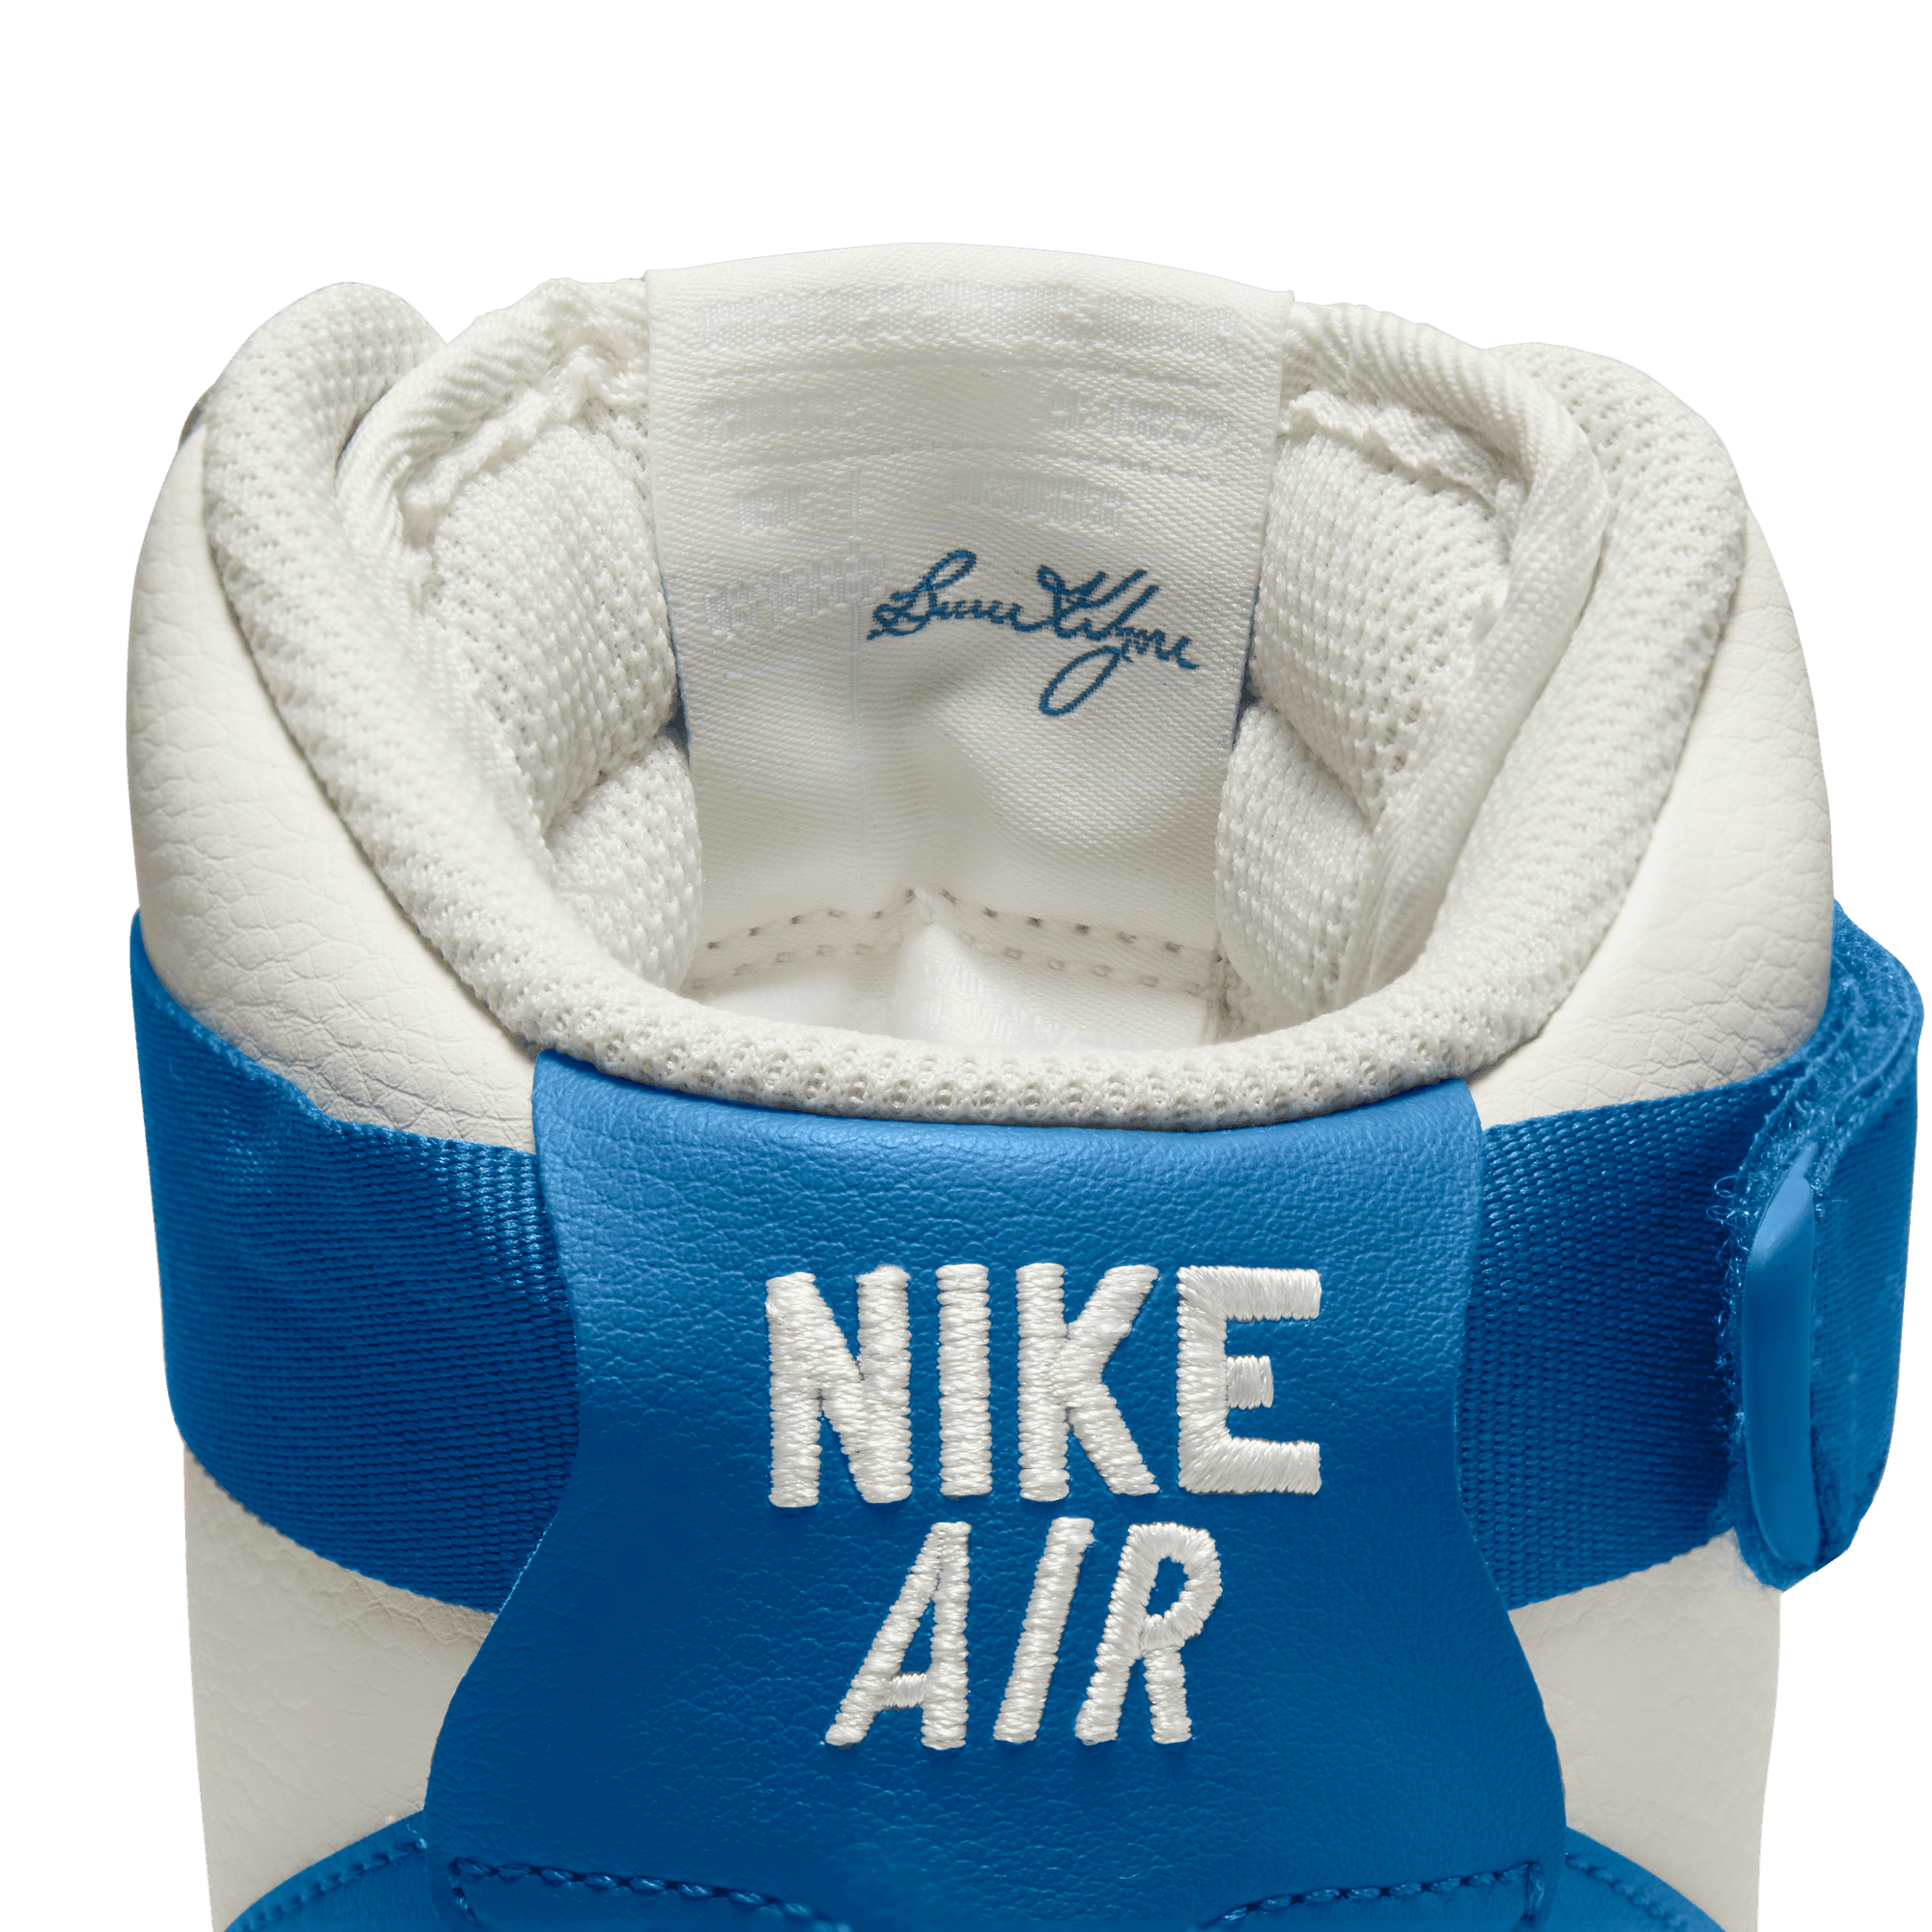 Nike FOOTWEAR Nike Air Force 1 High SE - Women's